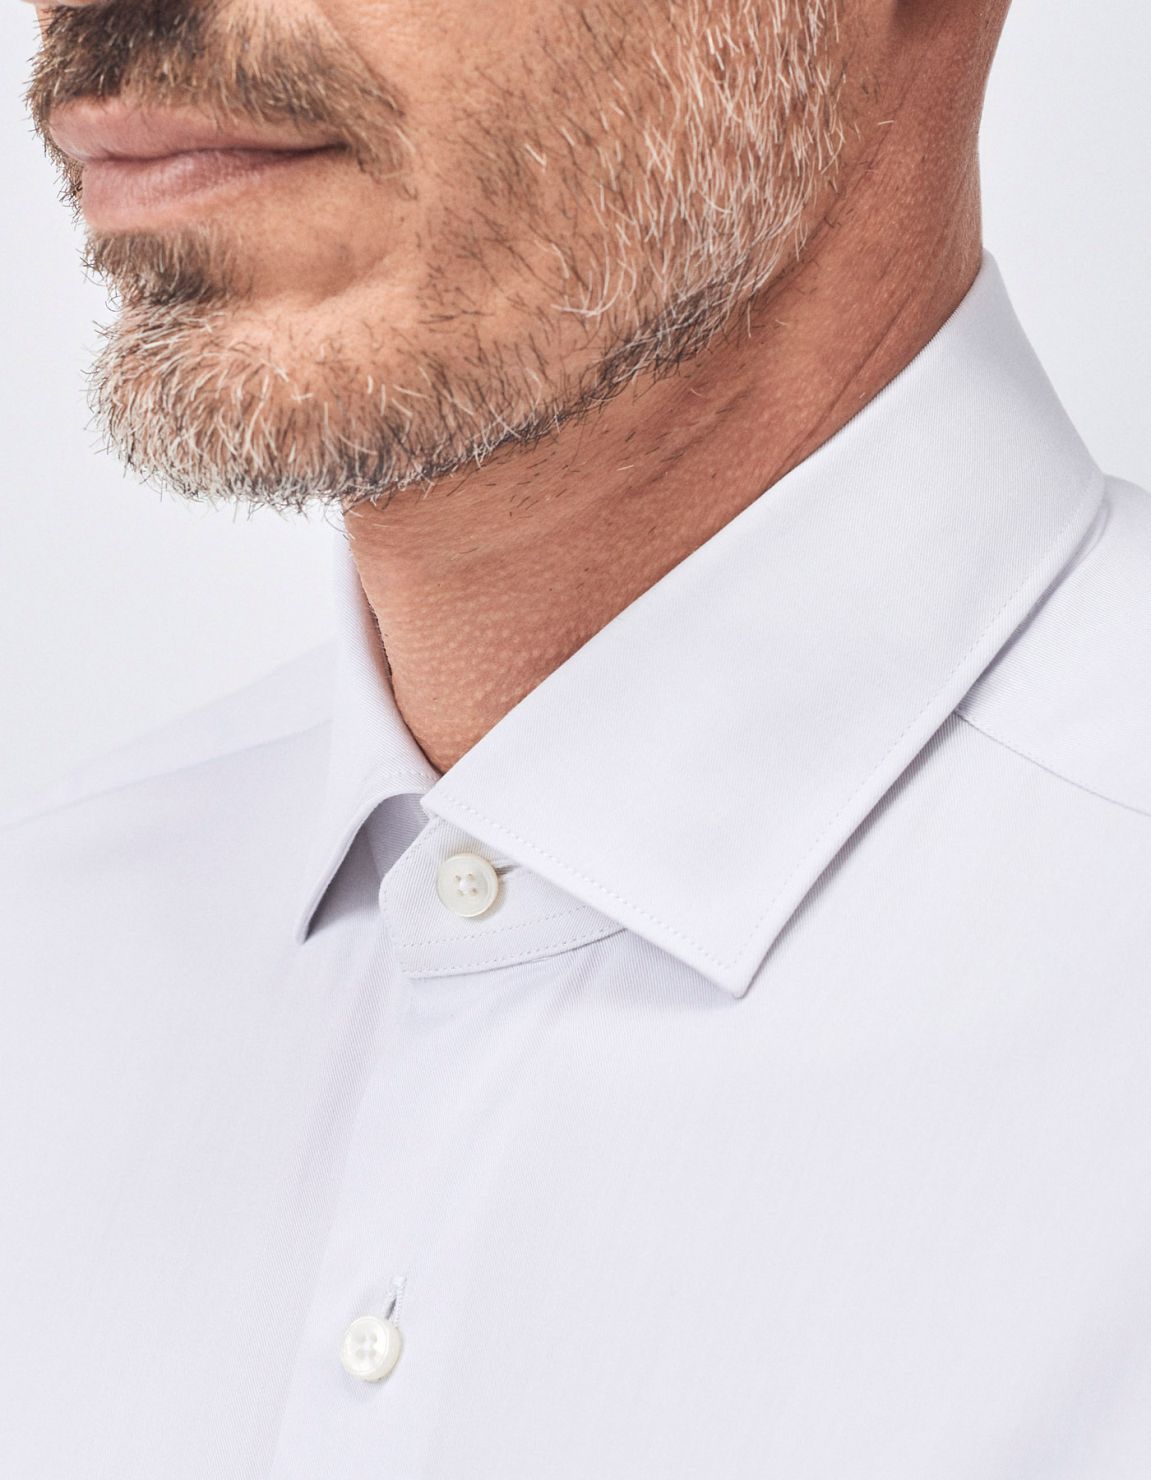 Shirt Collar small cutaway Grey Twill Tailor Custom Fit 3